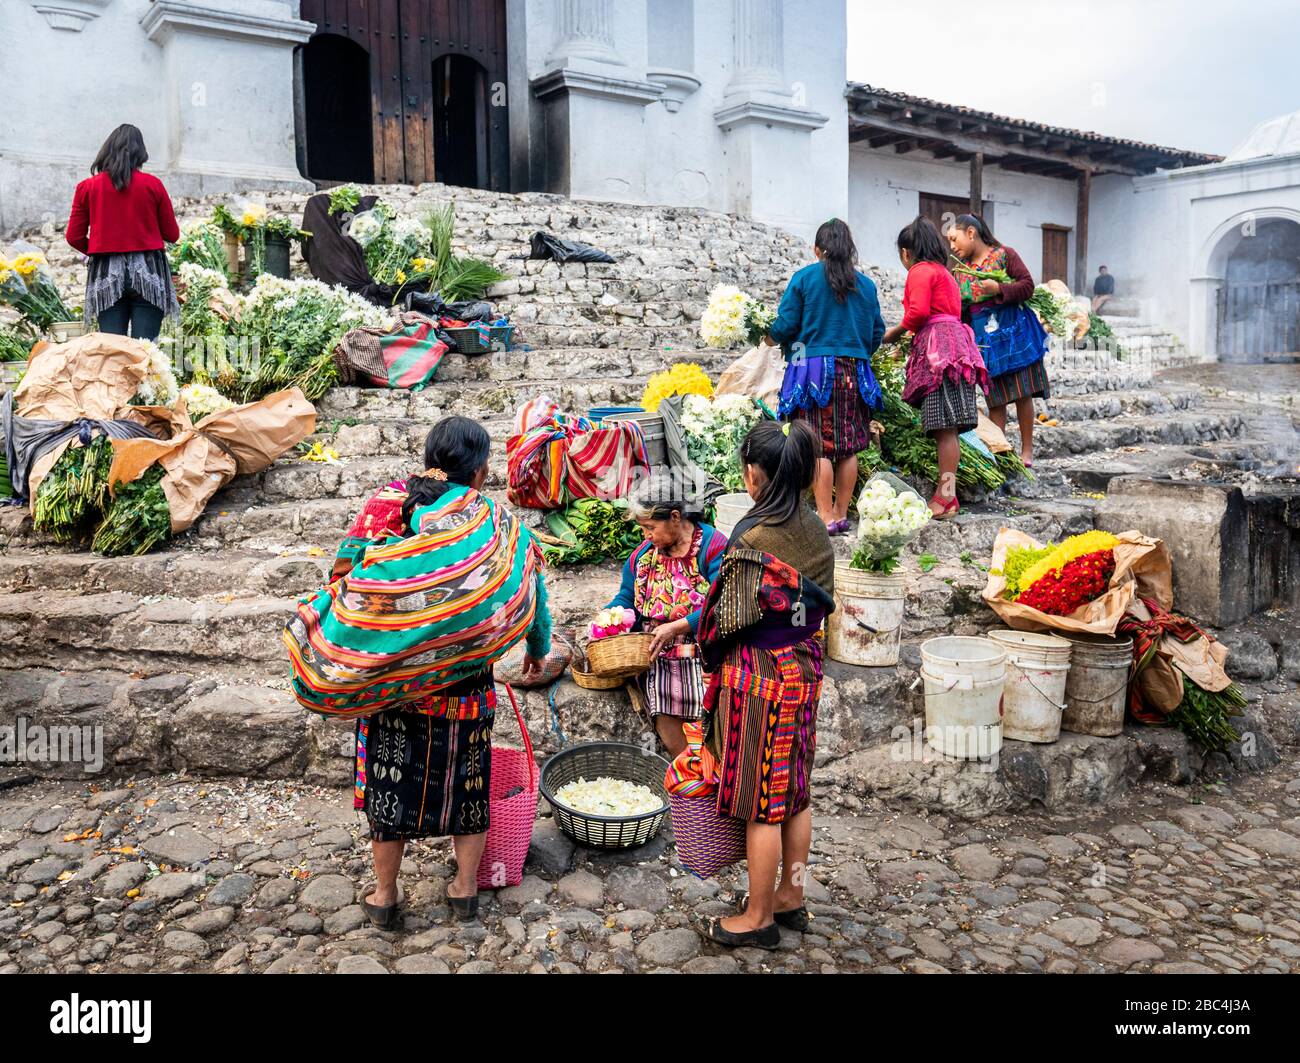 The flower market on the steps of the Iglesia de San Tomas in Chichicastenango, Guatemala. Stock Photo